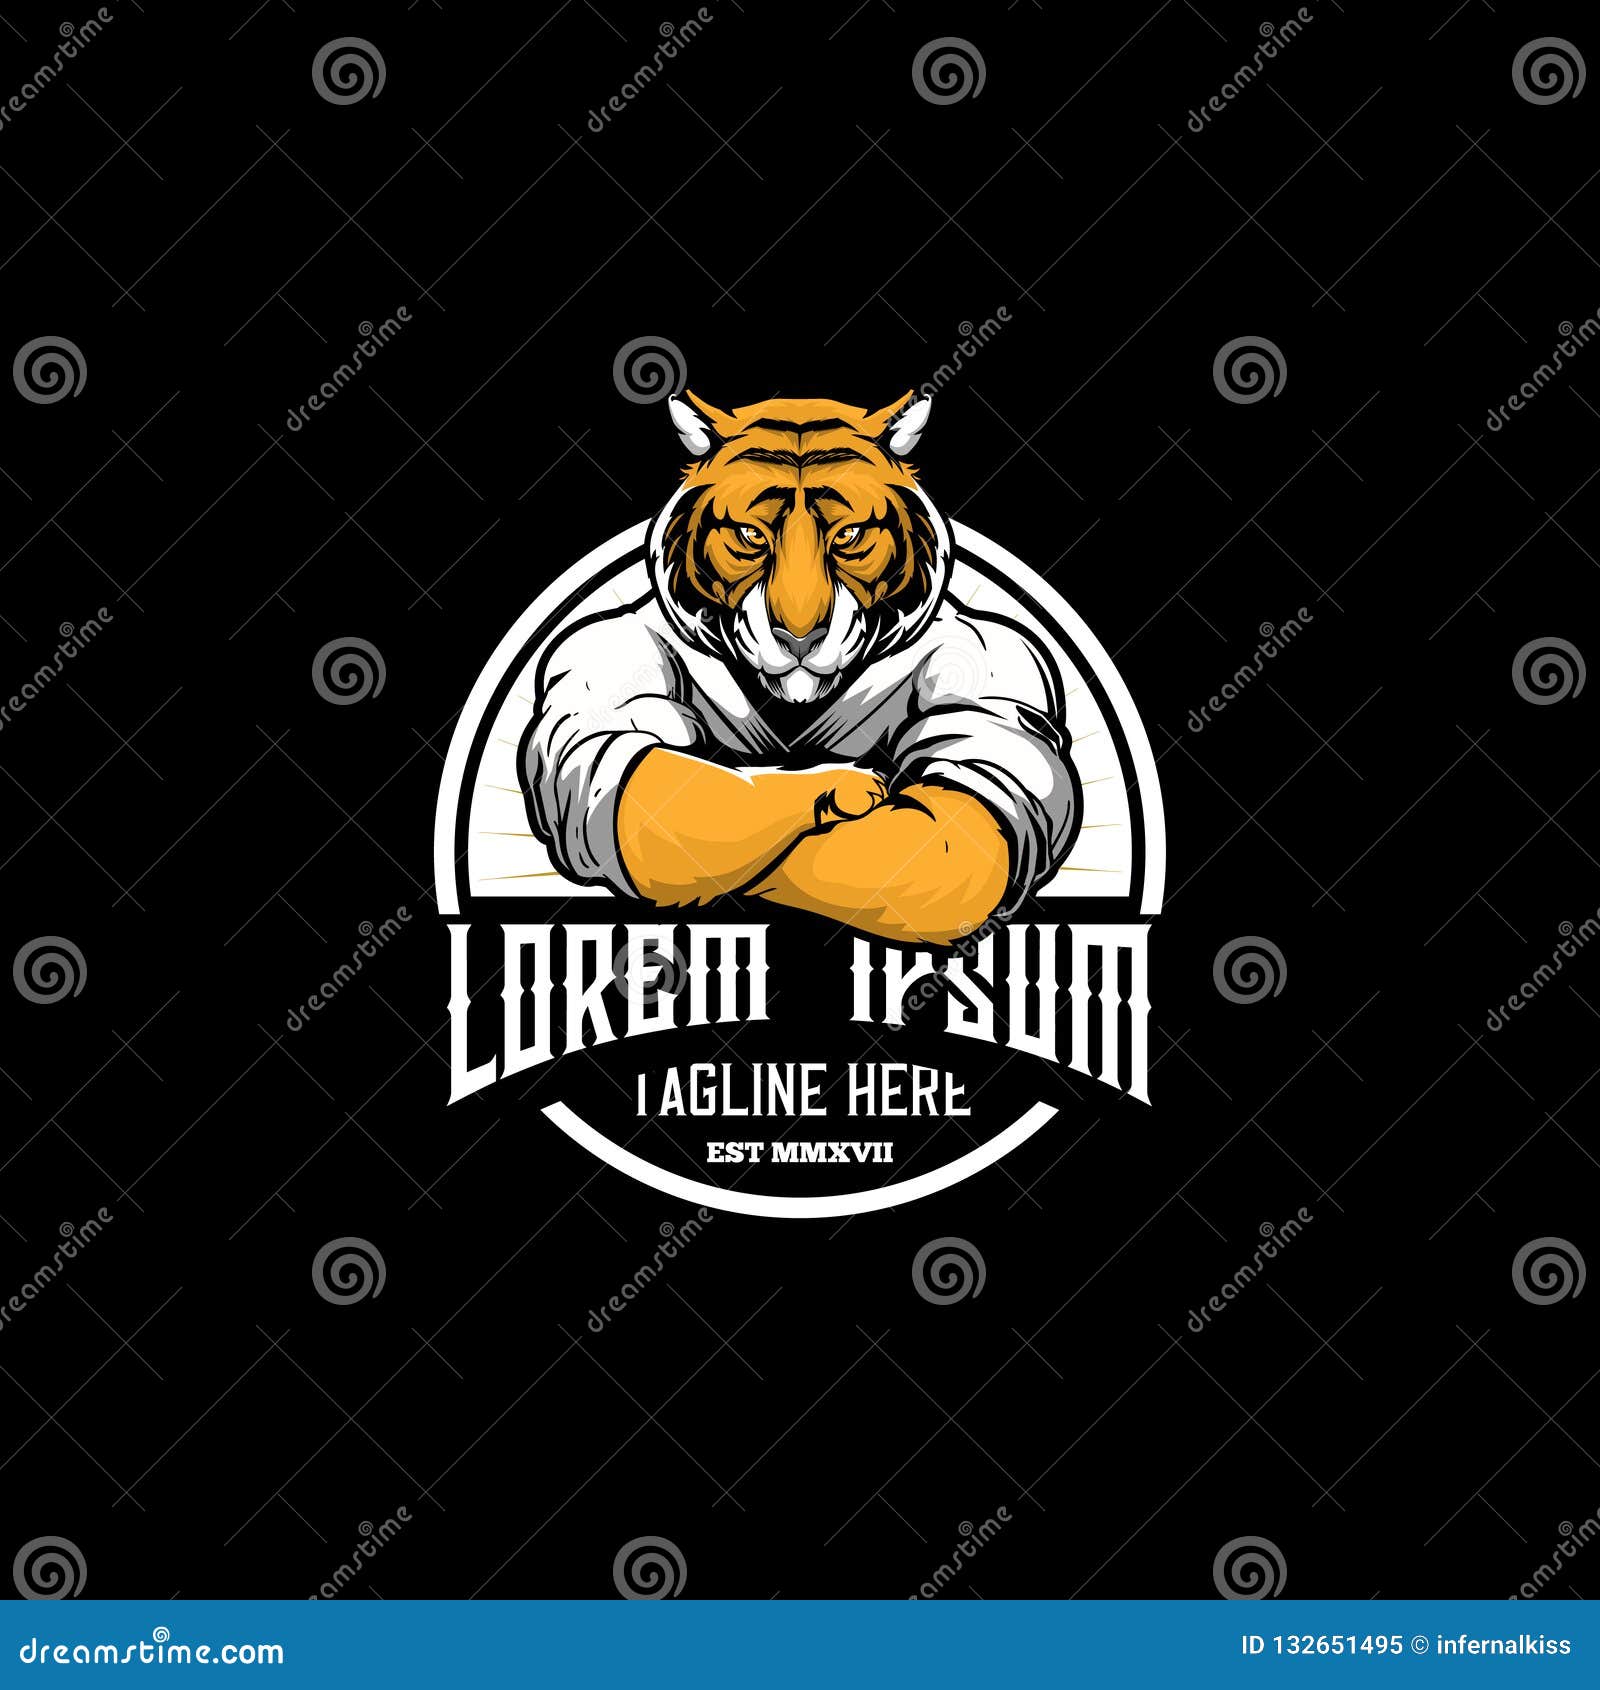 Amazing and Unique Tiger Cartoon Martial Arts Athletes Round Emblem Logo  Vector Template Stock Vector - Illustration of business, emblem: 132651495